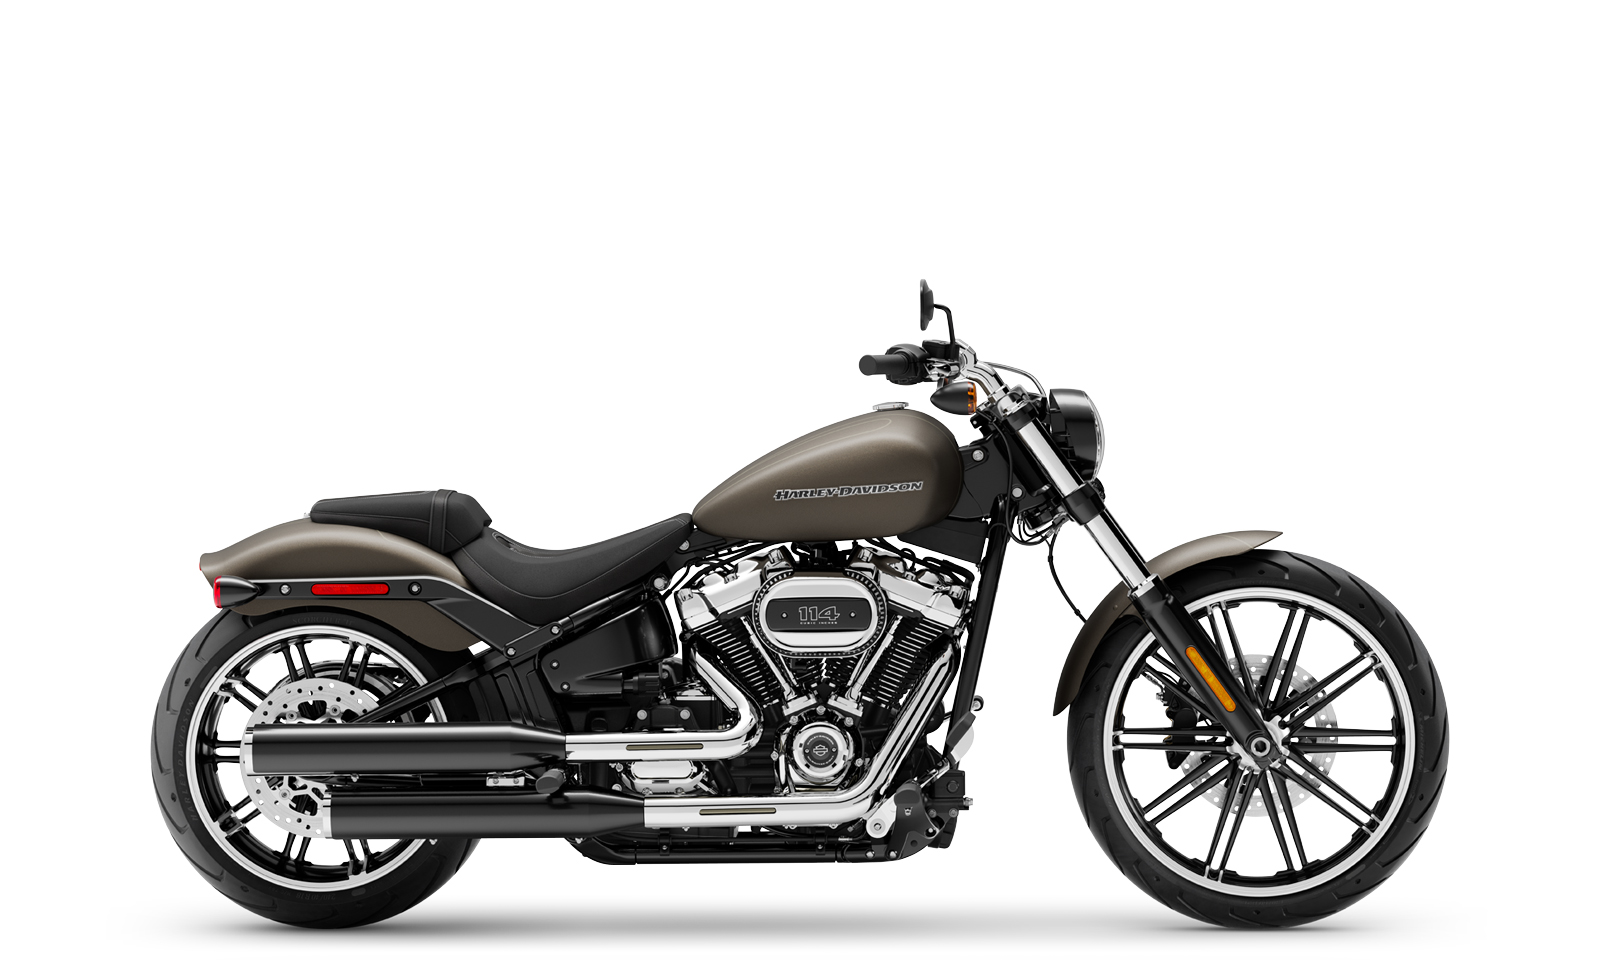 Harley Davidson Softail Breakout Price Off 76 Medpharmres Com